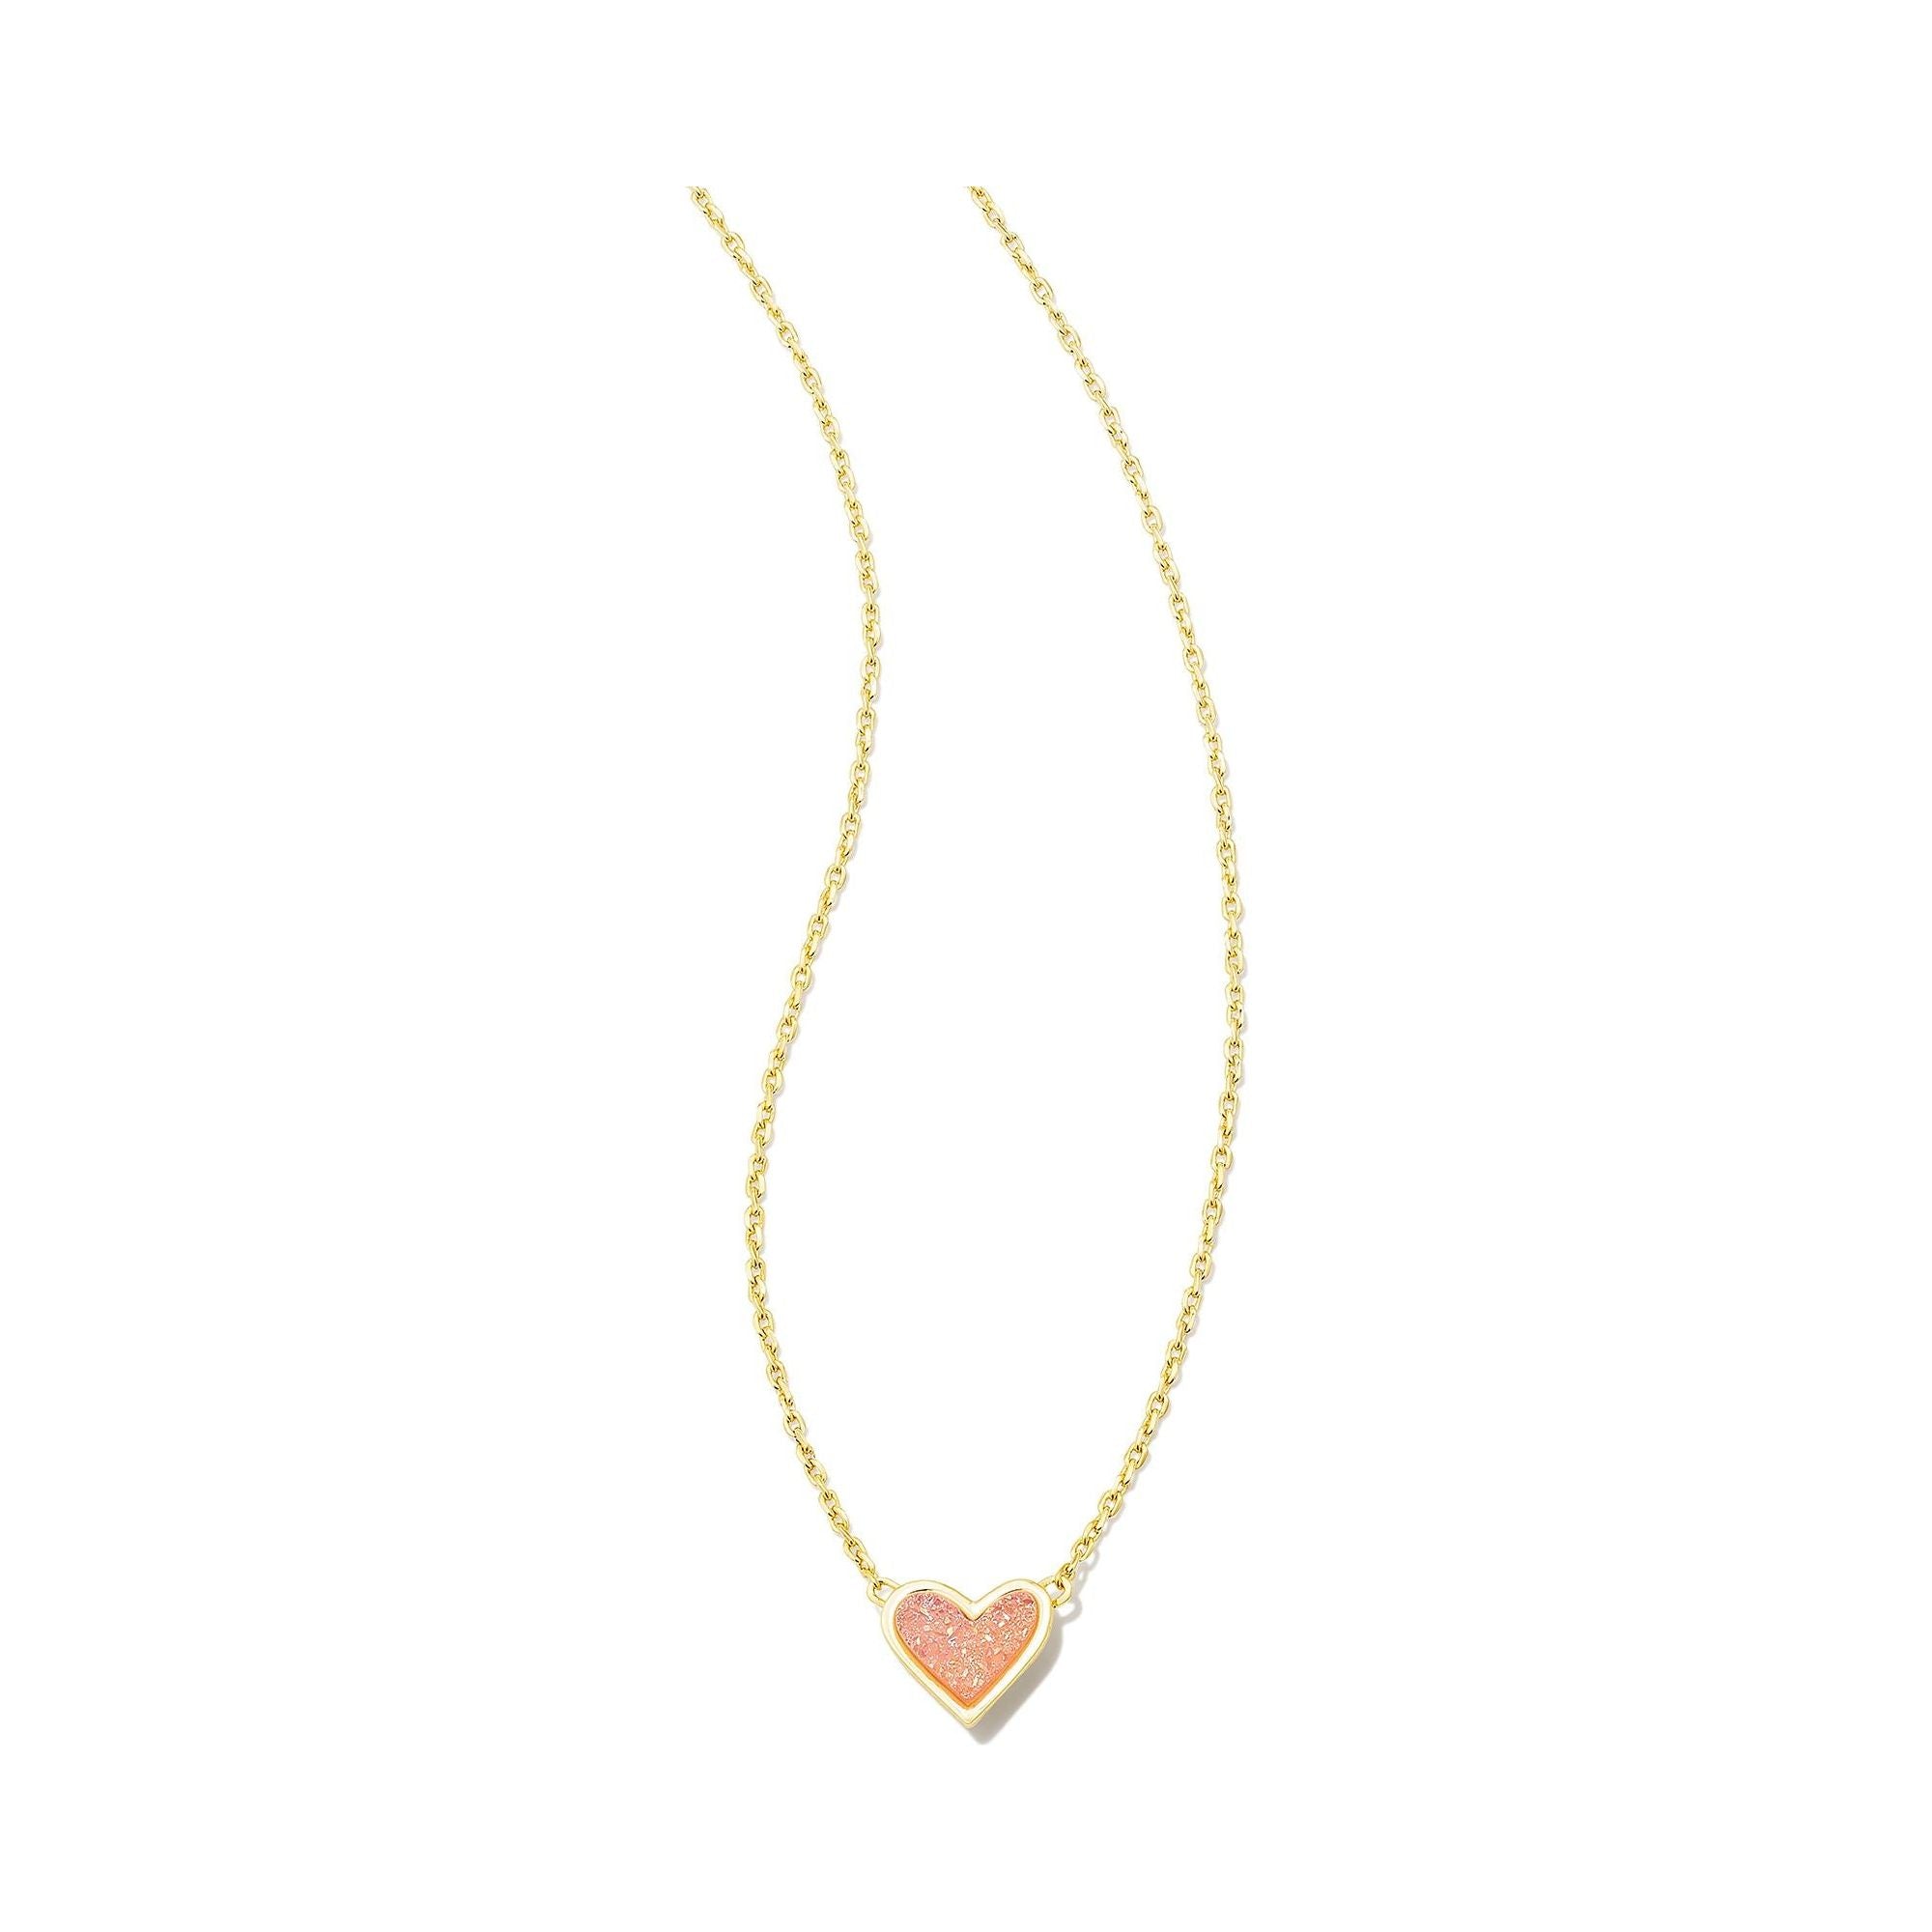 Elisa Unicorn Gold Short Pendant Necklace in Iridescent Drusy | Kendra Scott